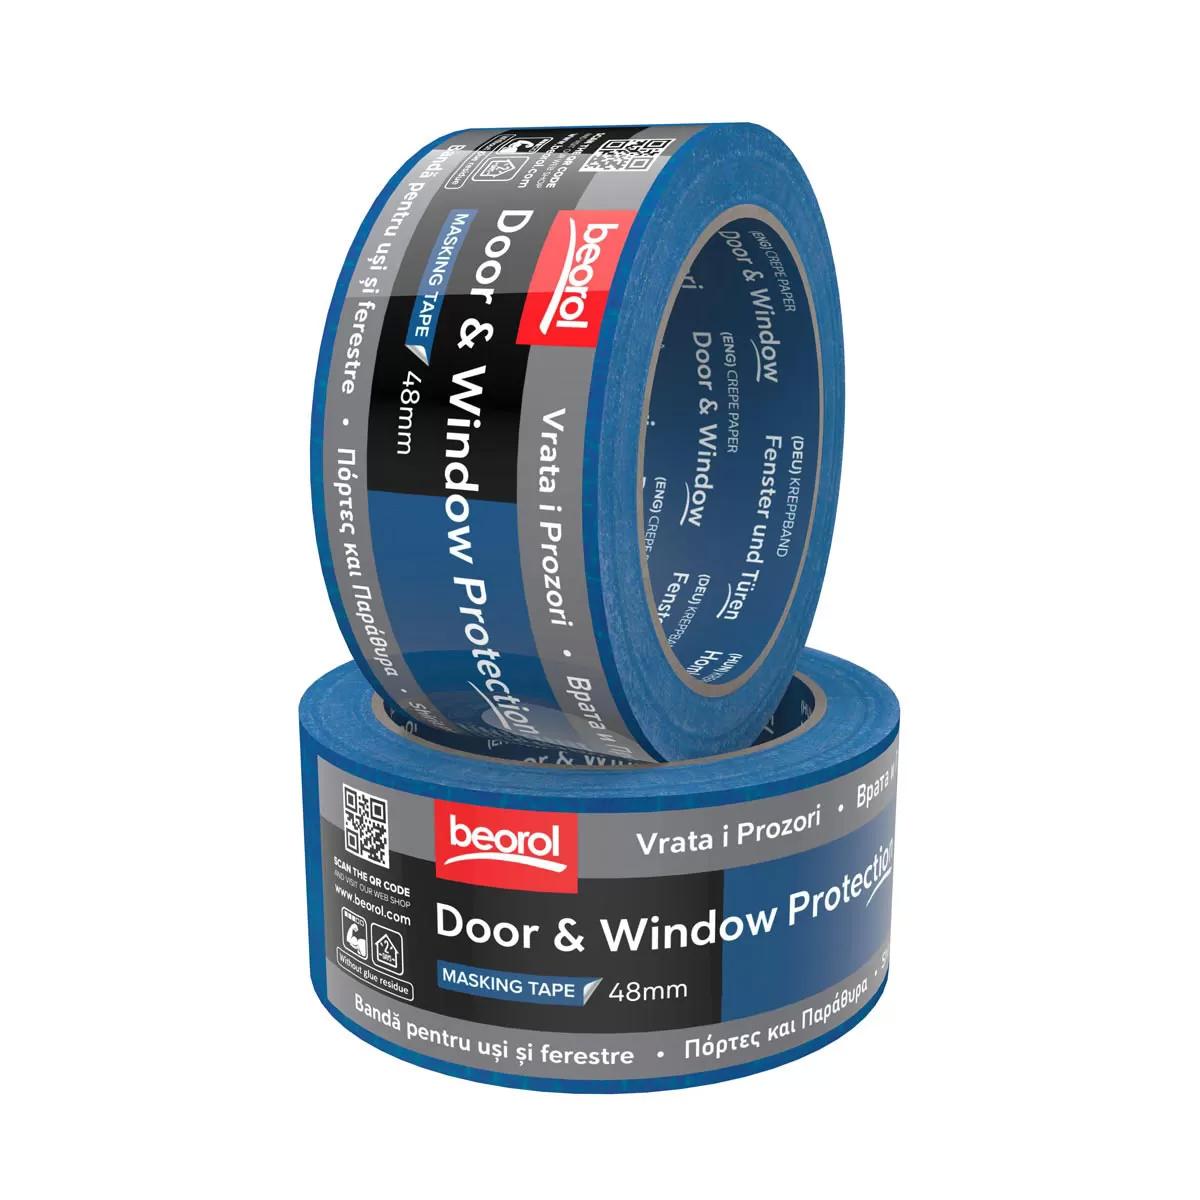 Masking tape Door & Window protection 48mm x 50m, 80ᵒC 